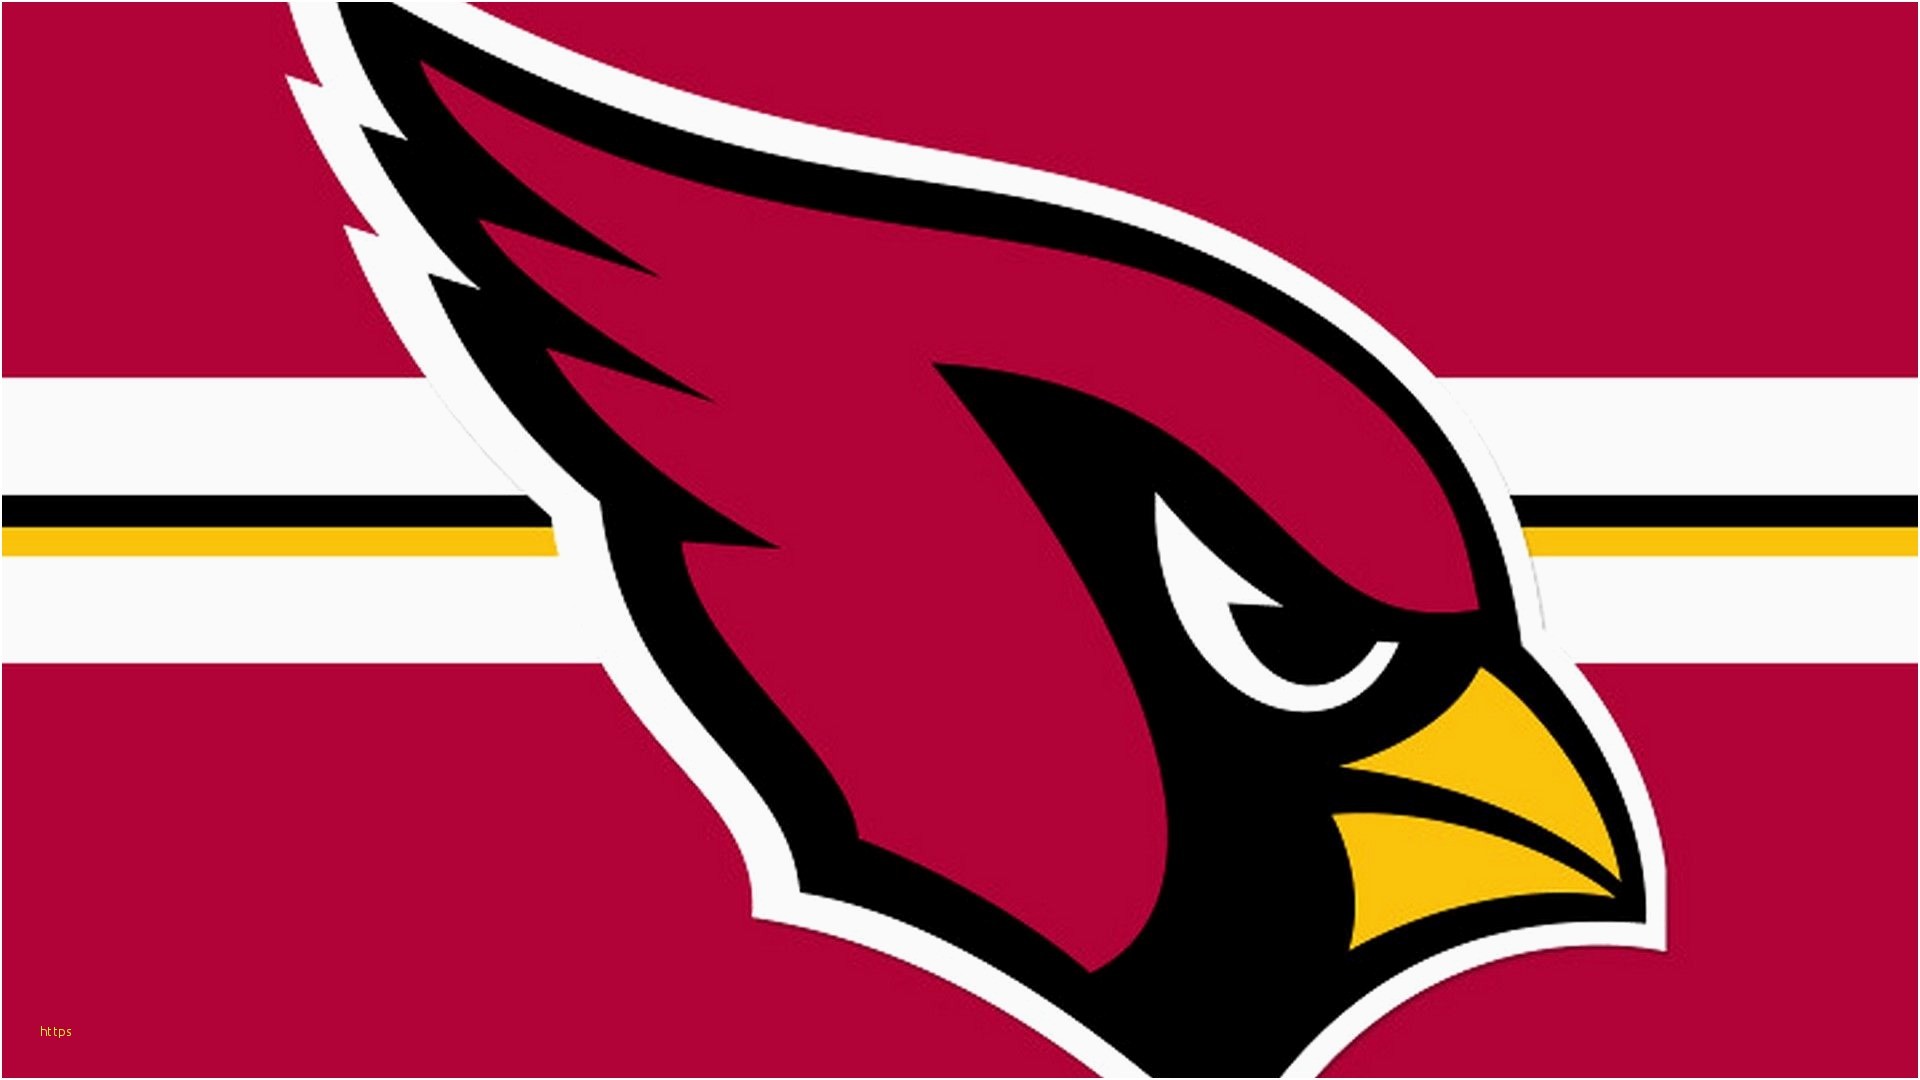 Arizona Cardinals HD Wallpaper Image